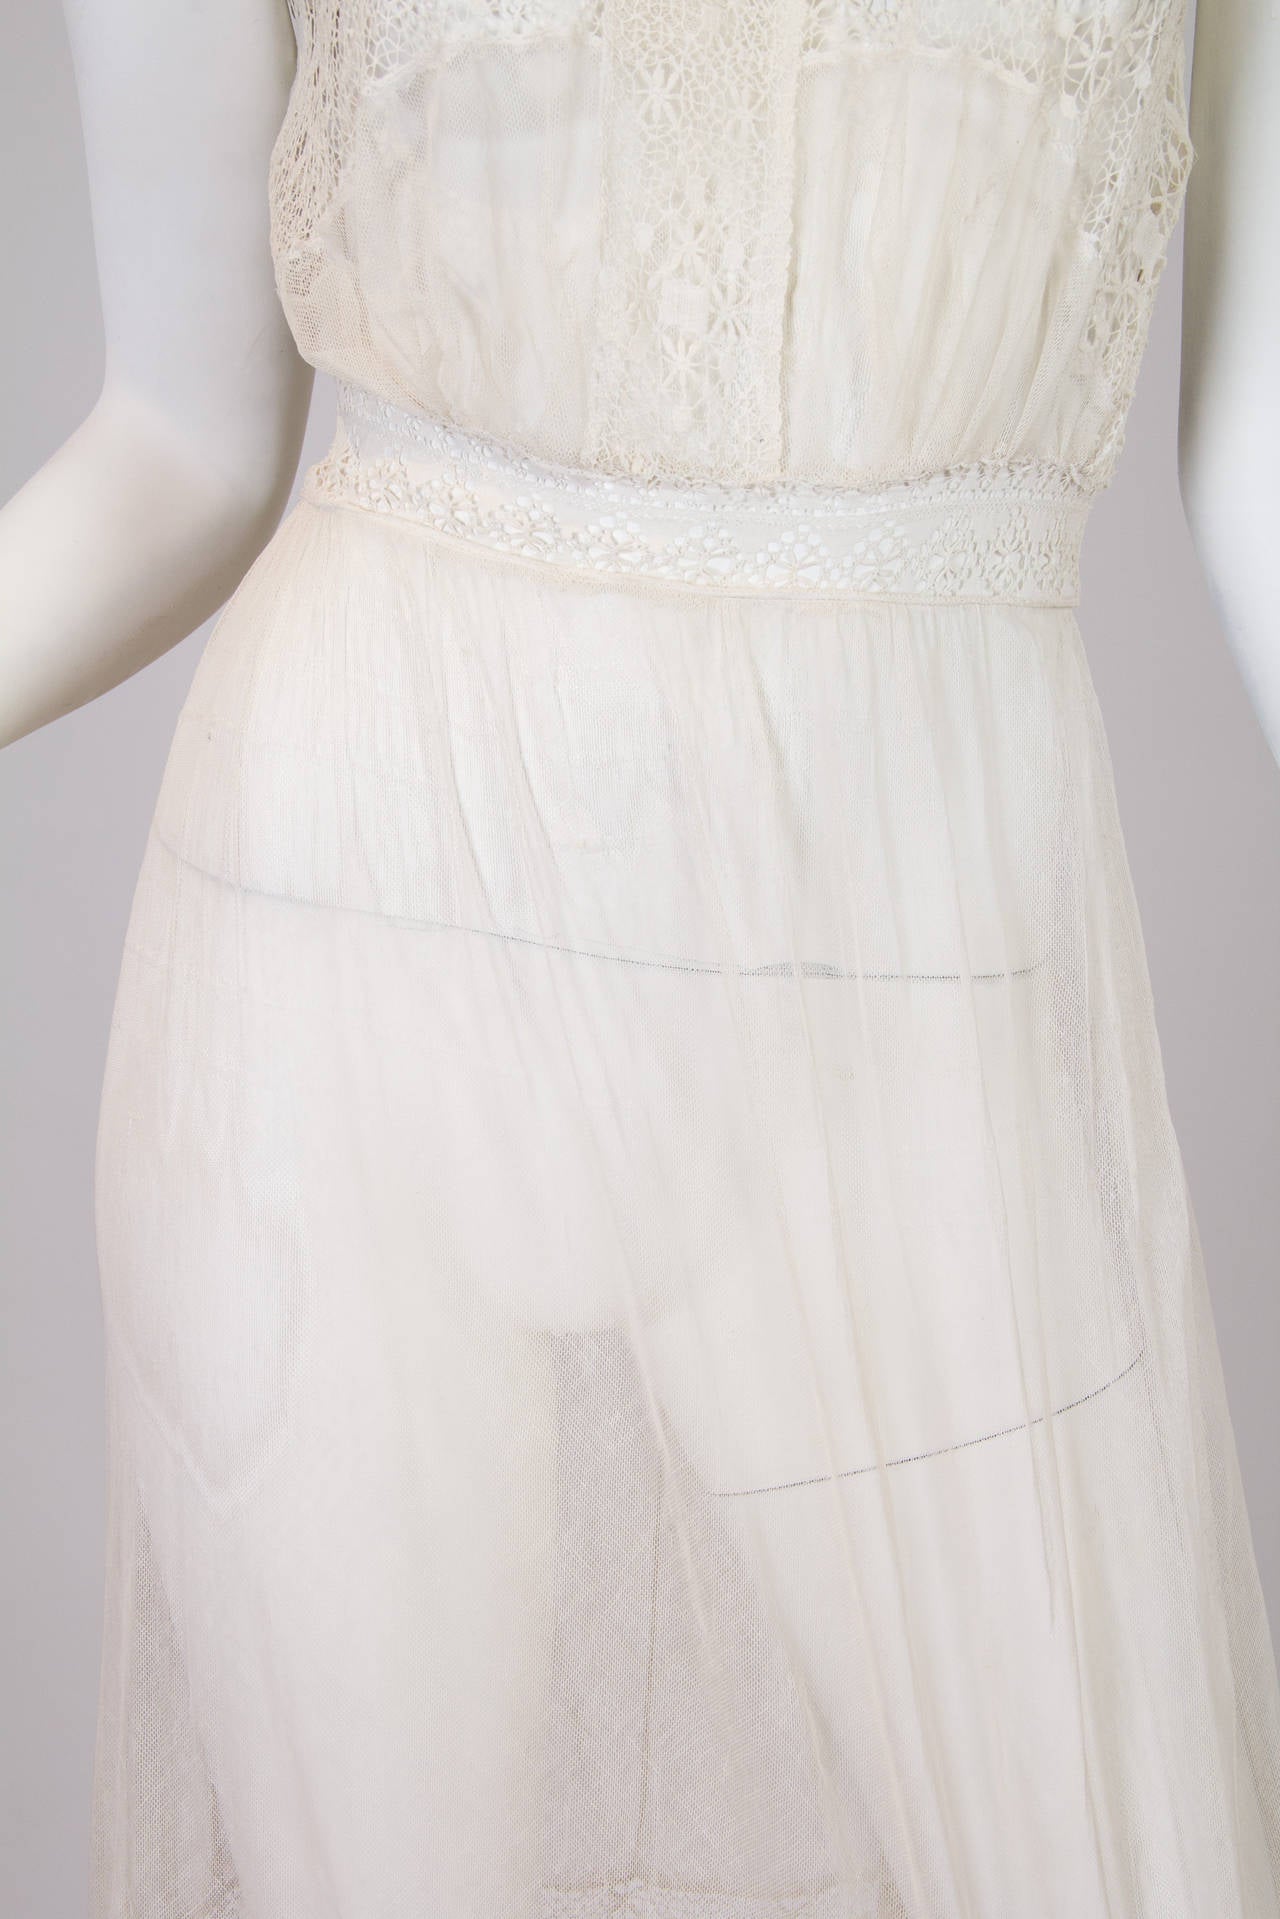 Edwardian Lace Dress 4